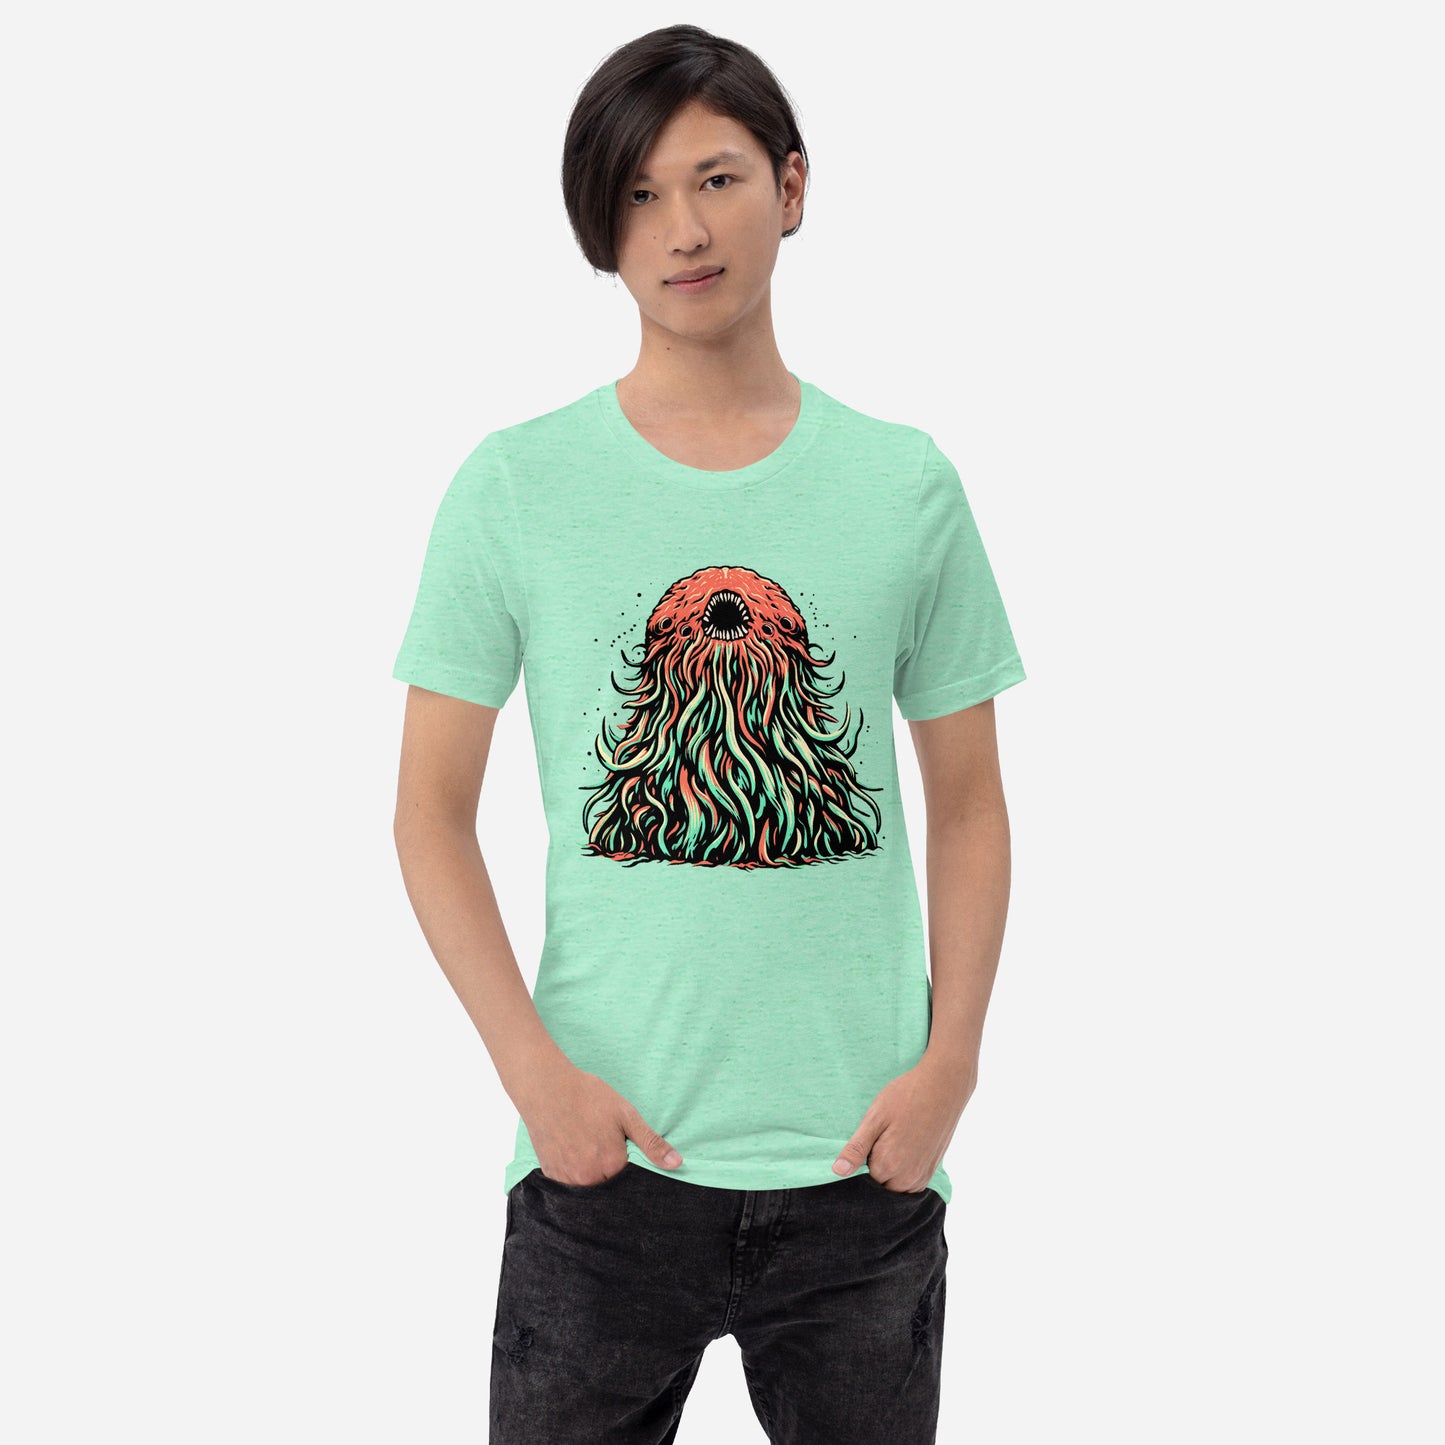 "myceliath" unisex t-shirt